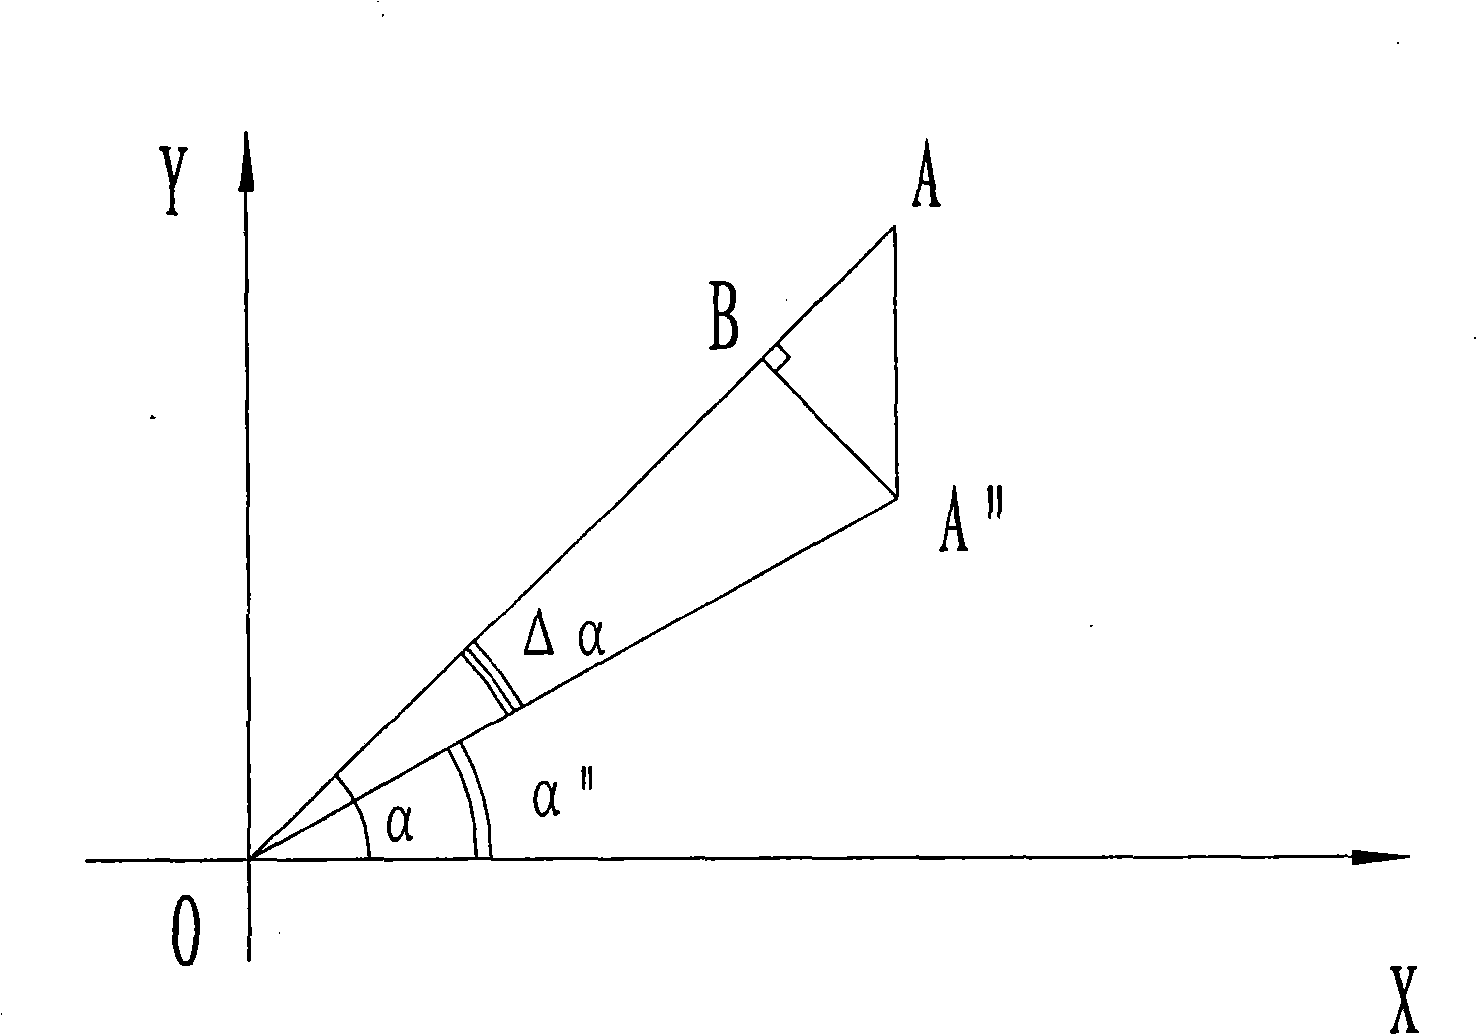 Three-coordinate measuring method for circumferential uniformly-distributed hole true position error